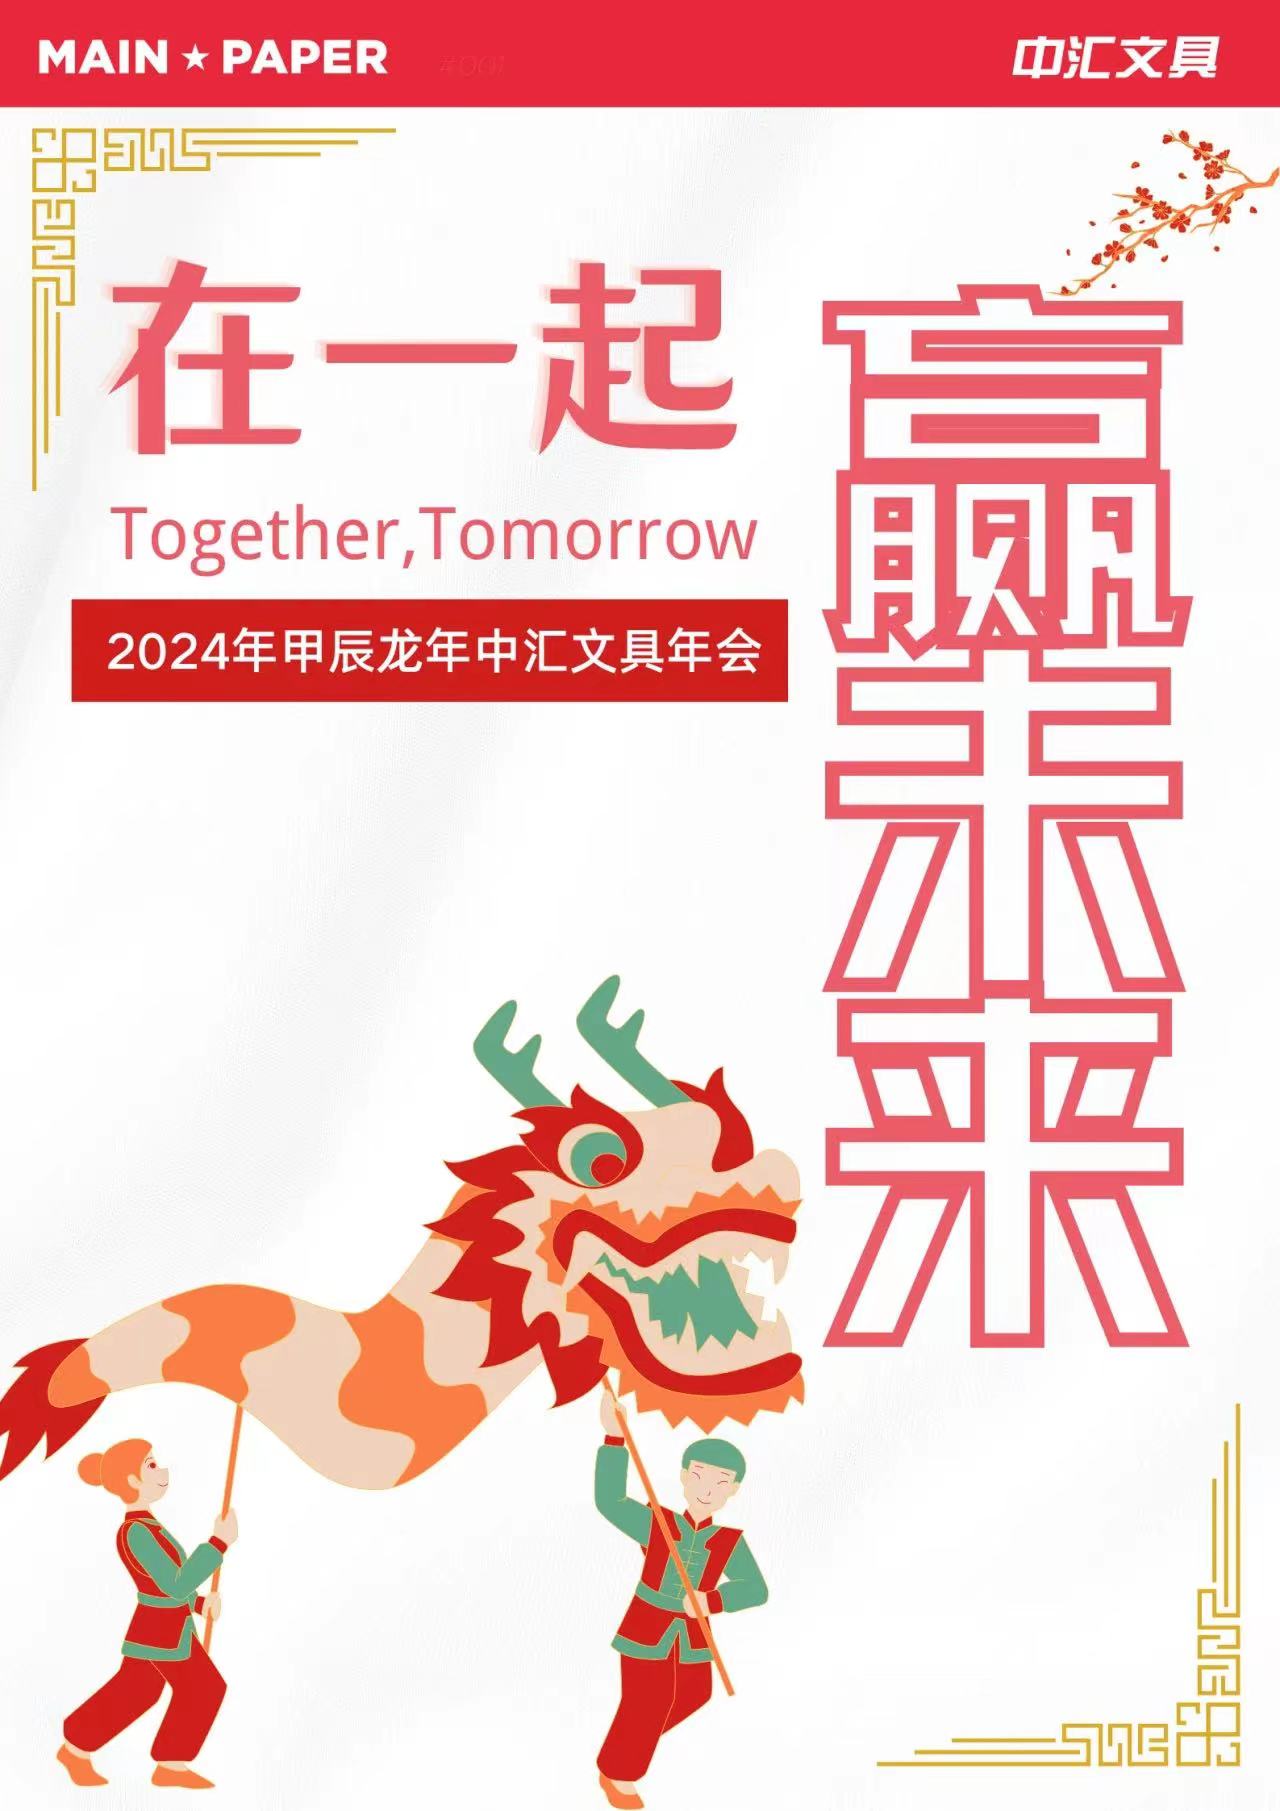 "Together၊ မနက်ဖြန်" Main Paper Dragon နှစ်ပတ်လည်ညီလာခံ 2024